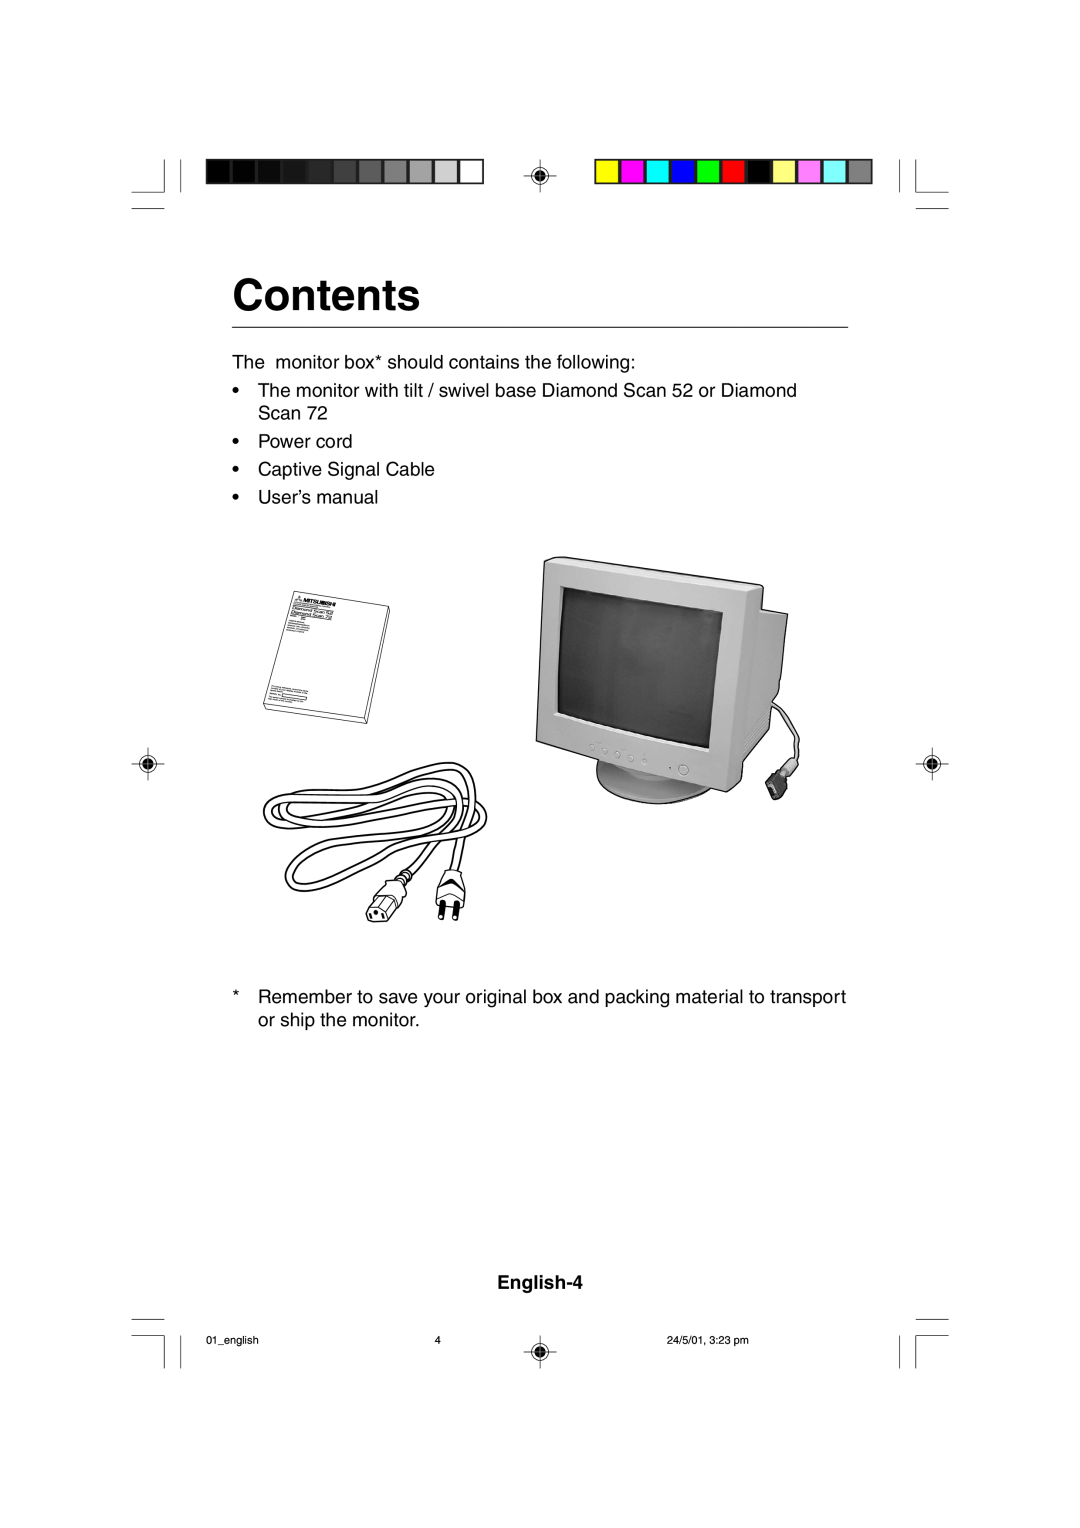 Mitsubishi Electronics M557 user manual Contents, English-4, 01english, 24/5/01, 323 pm 